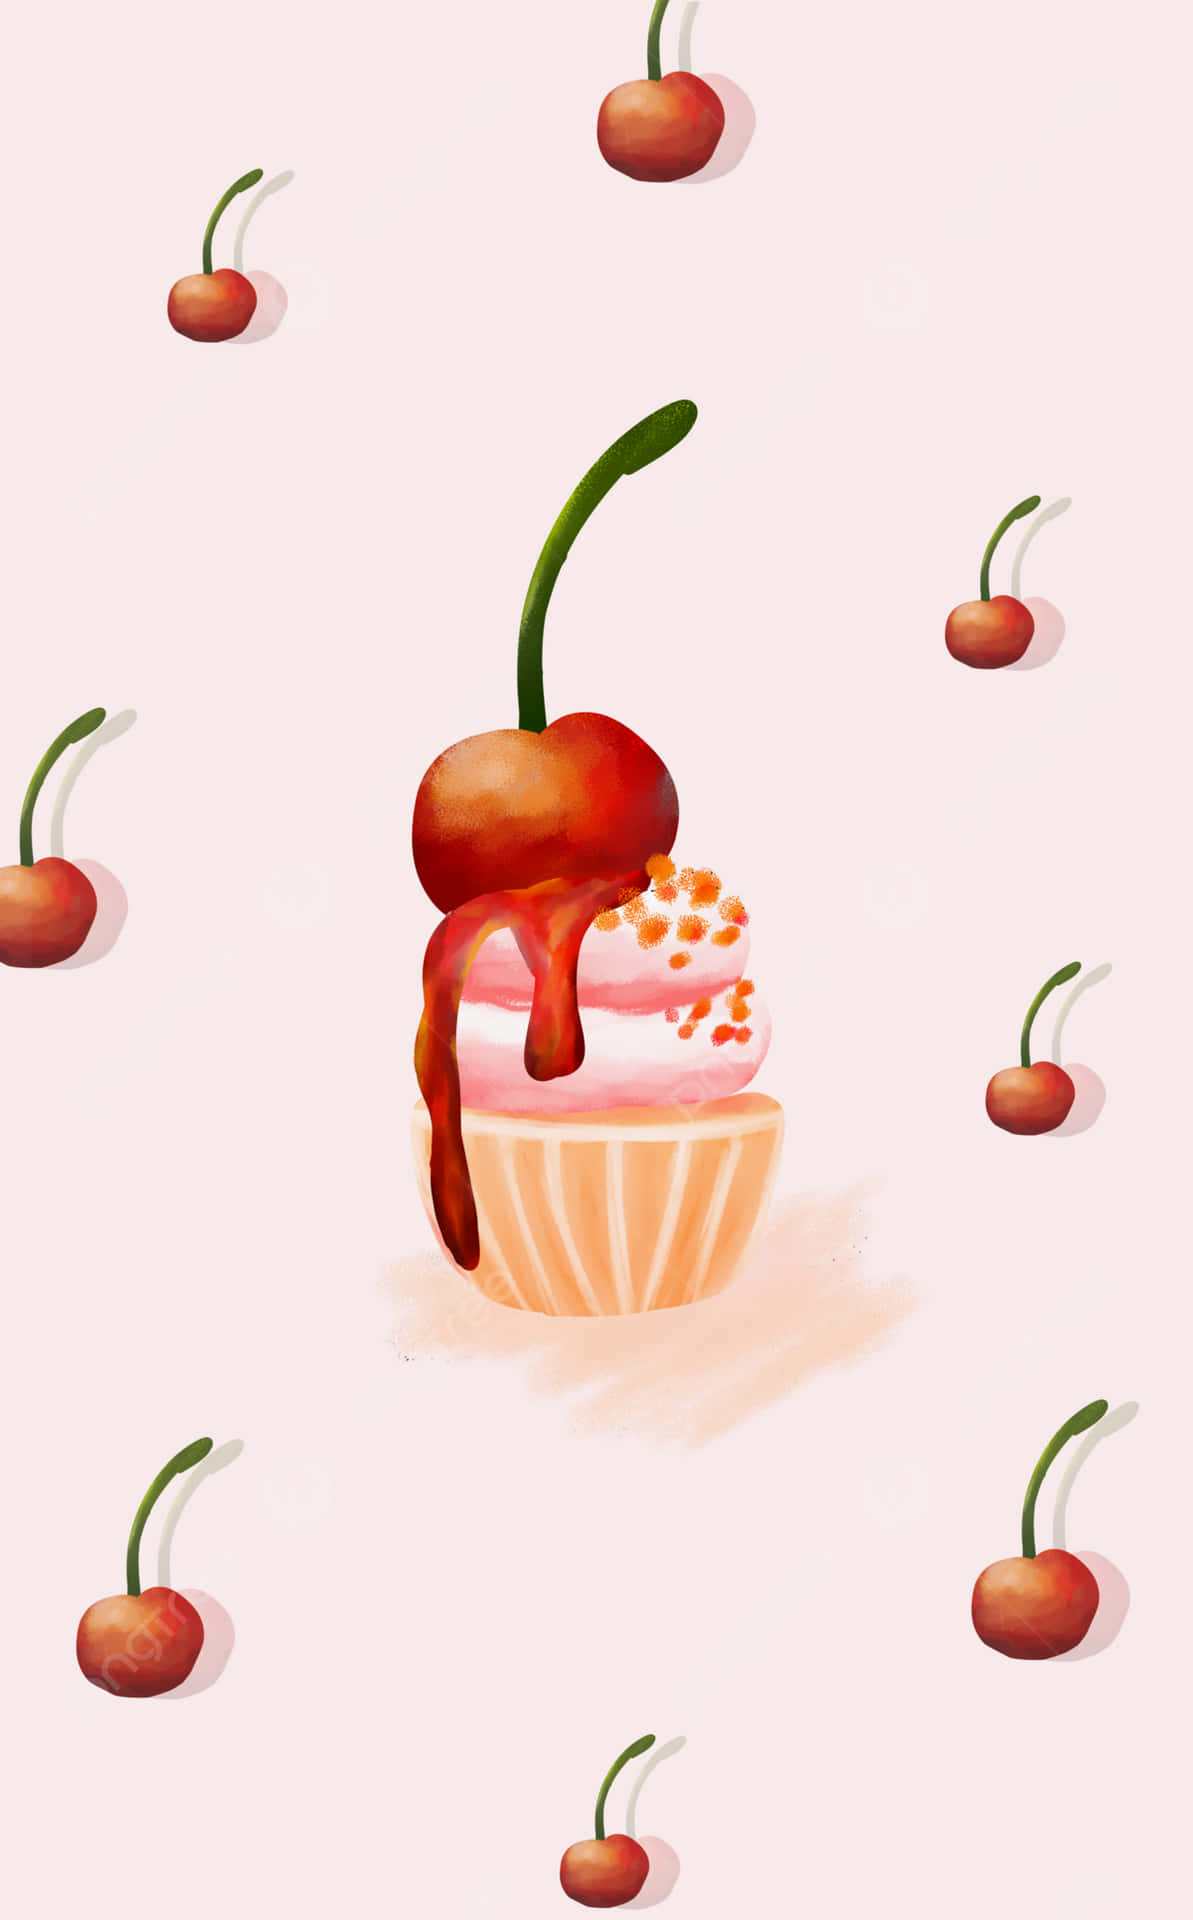 Cute Chocolate Cherry On Cupcake Wallpaper